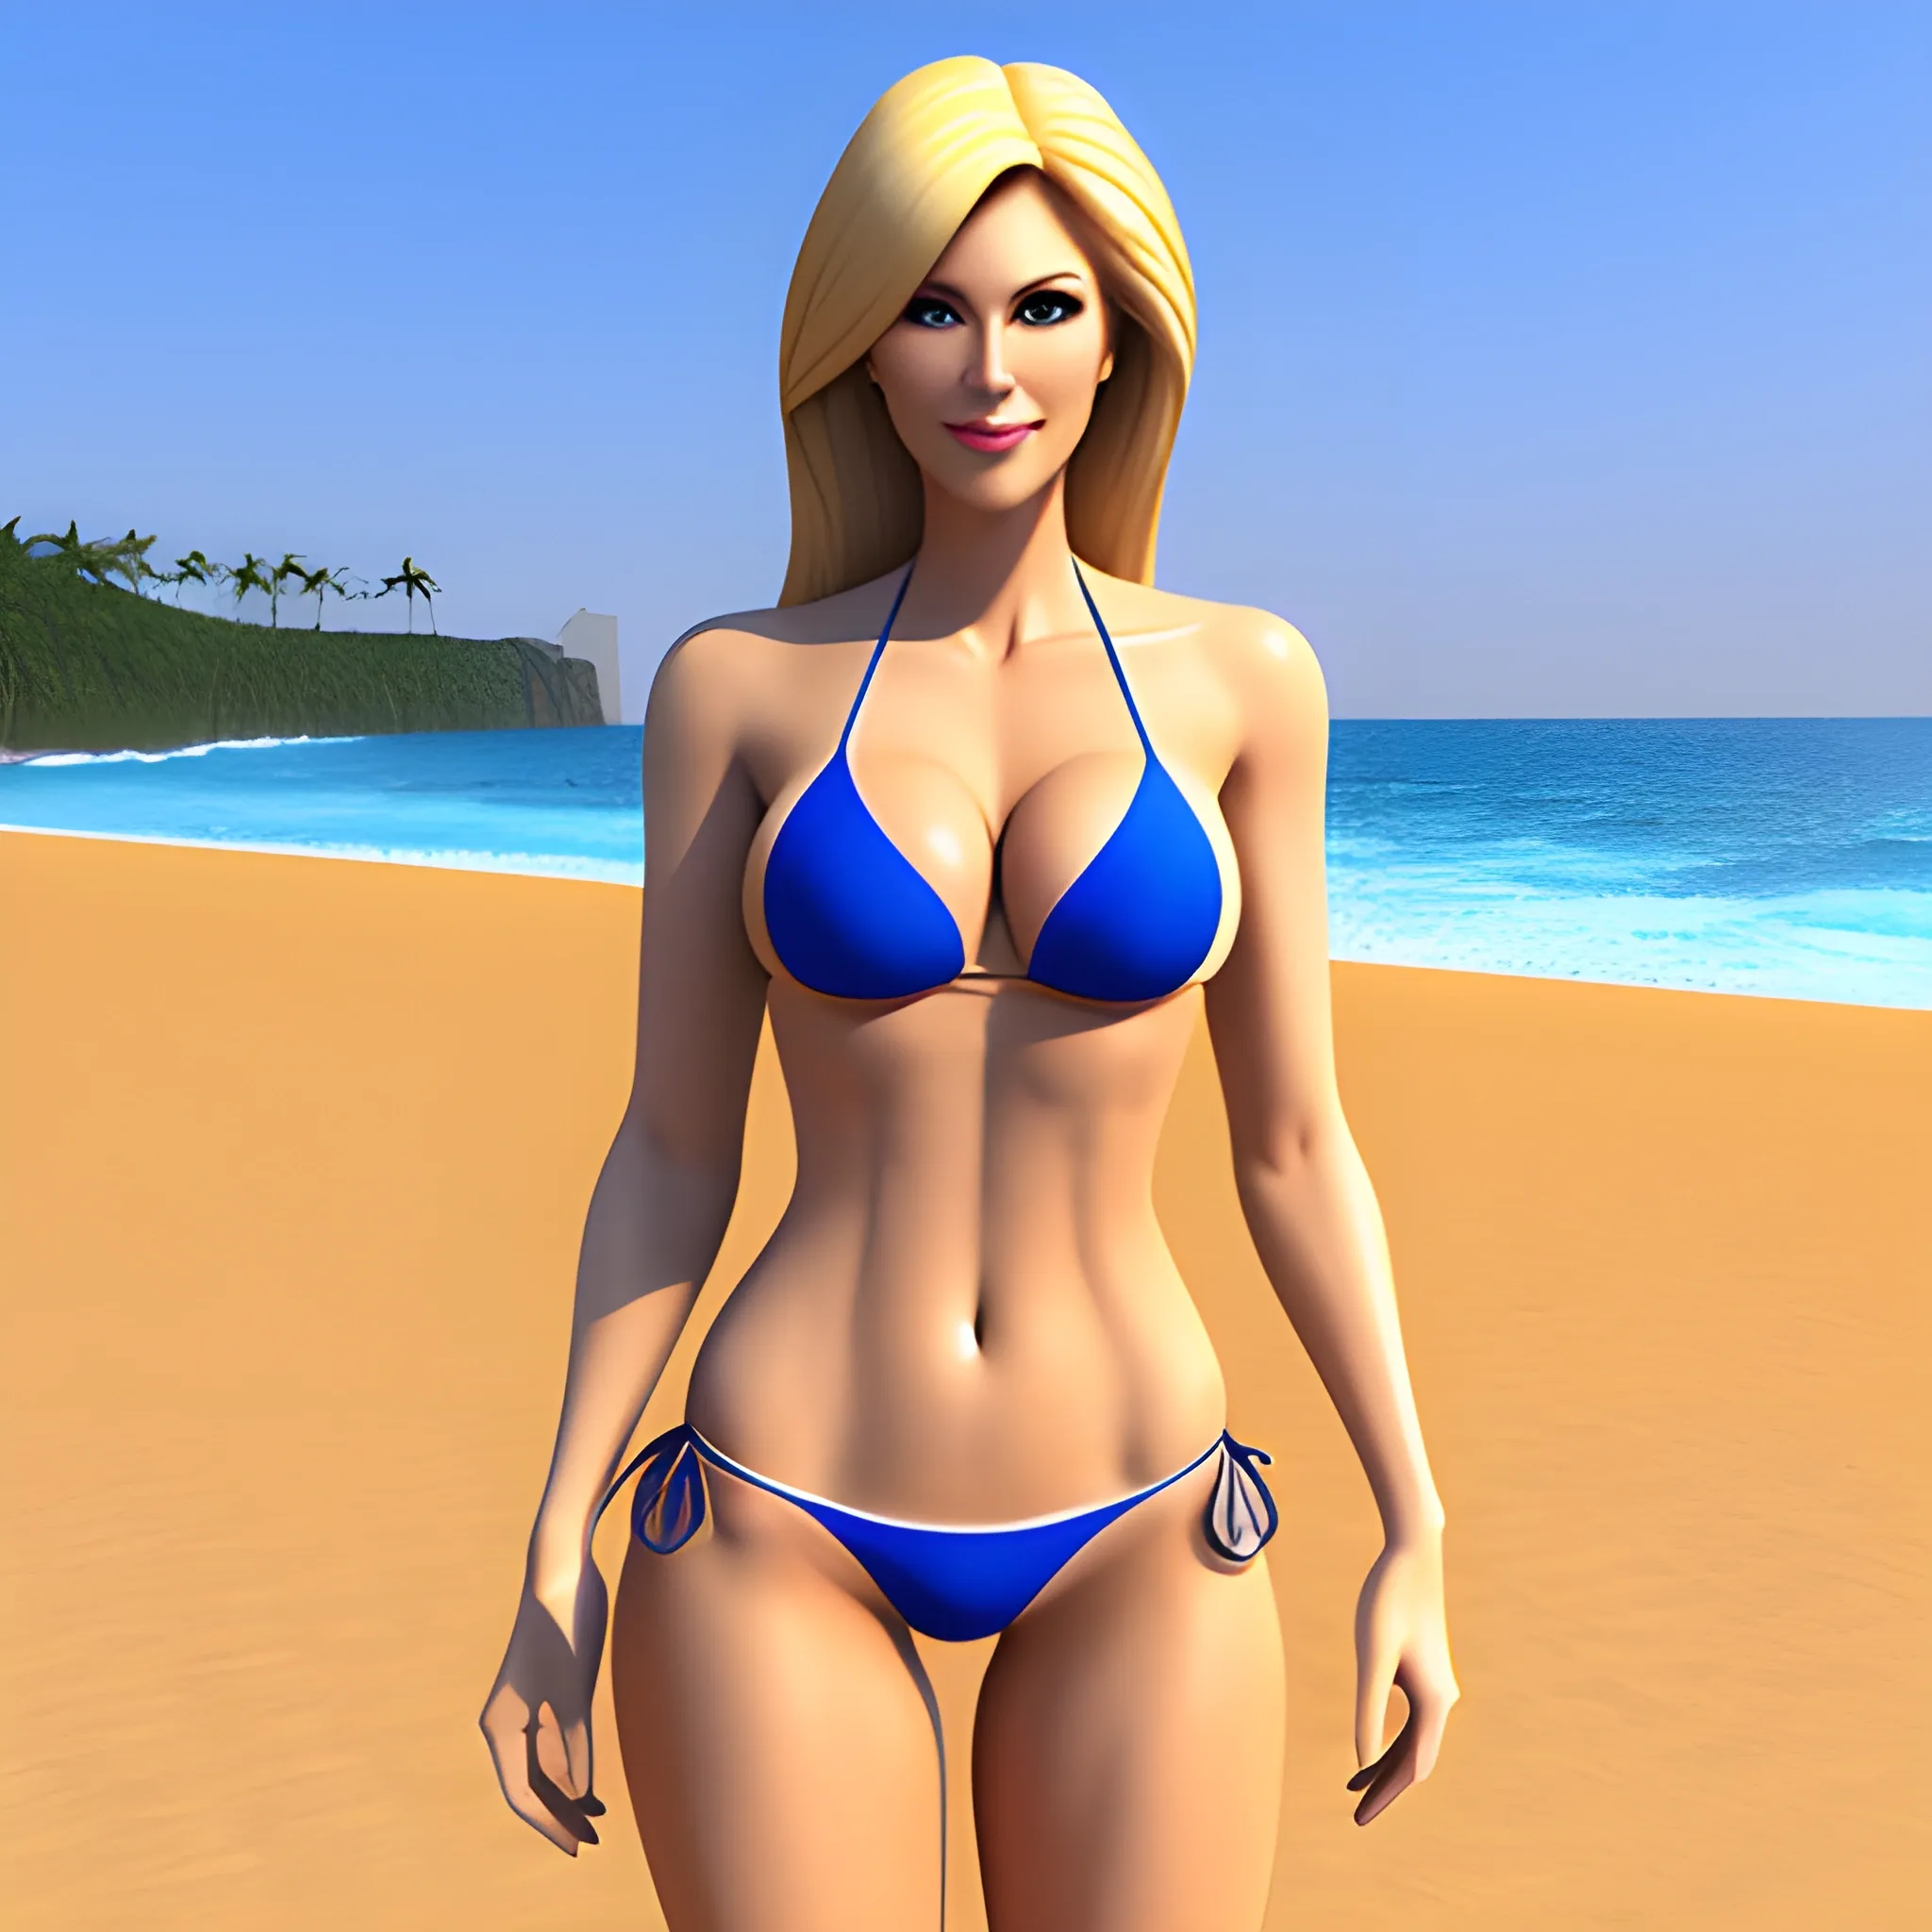 Blond girl at beach in bikini full body, 3D